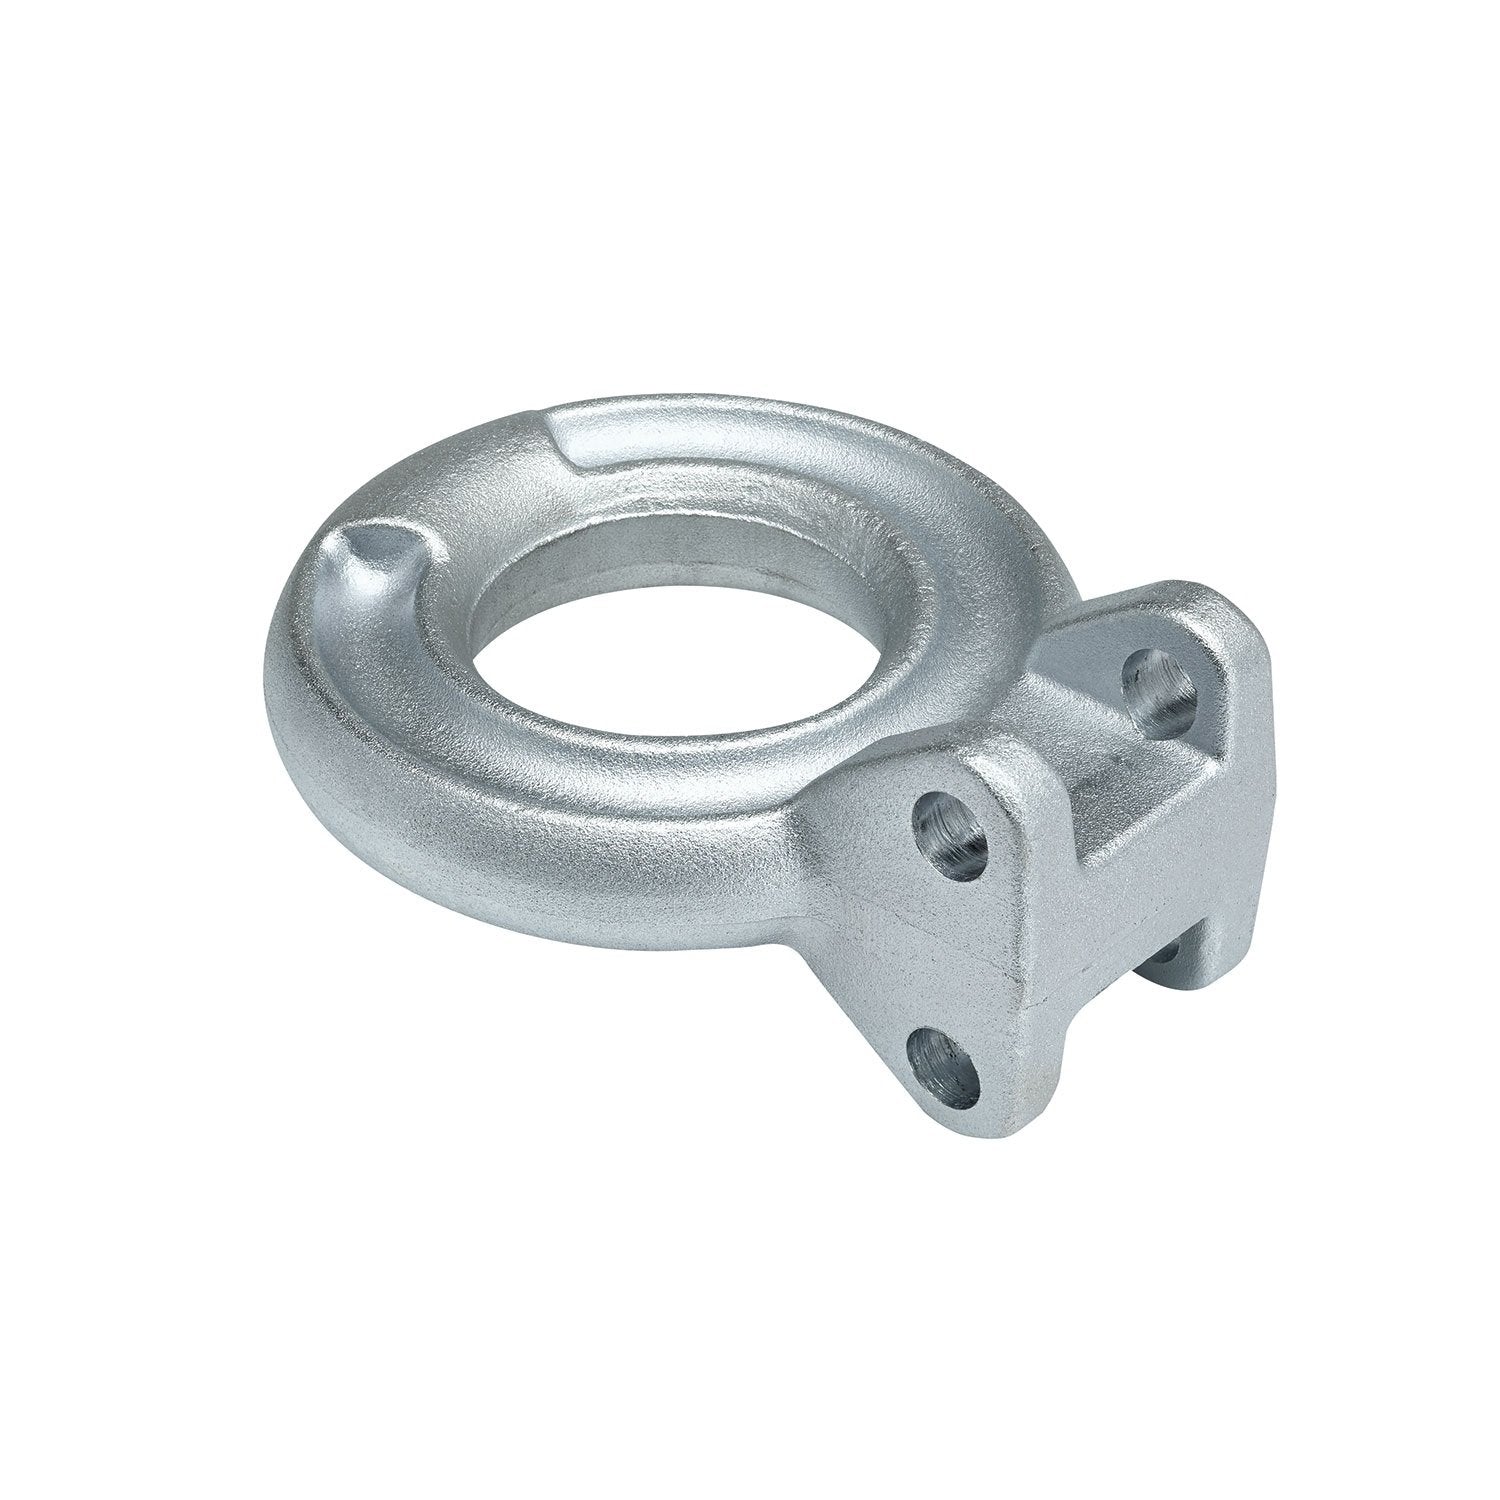 Bulldog 1291020340 Adjustable Lunette Ring